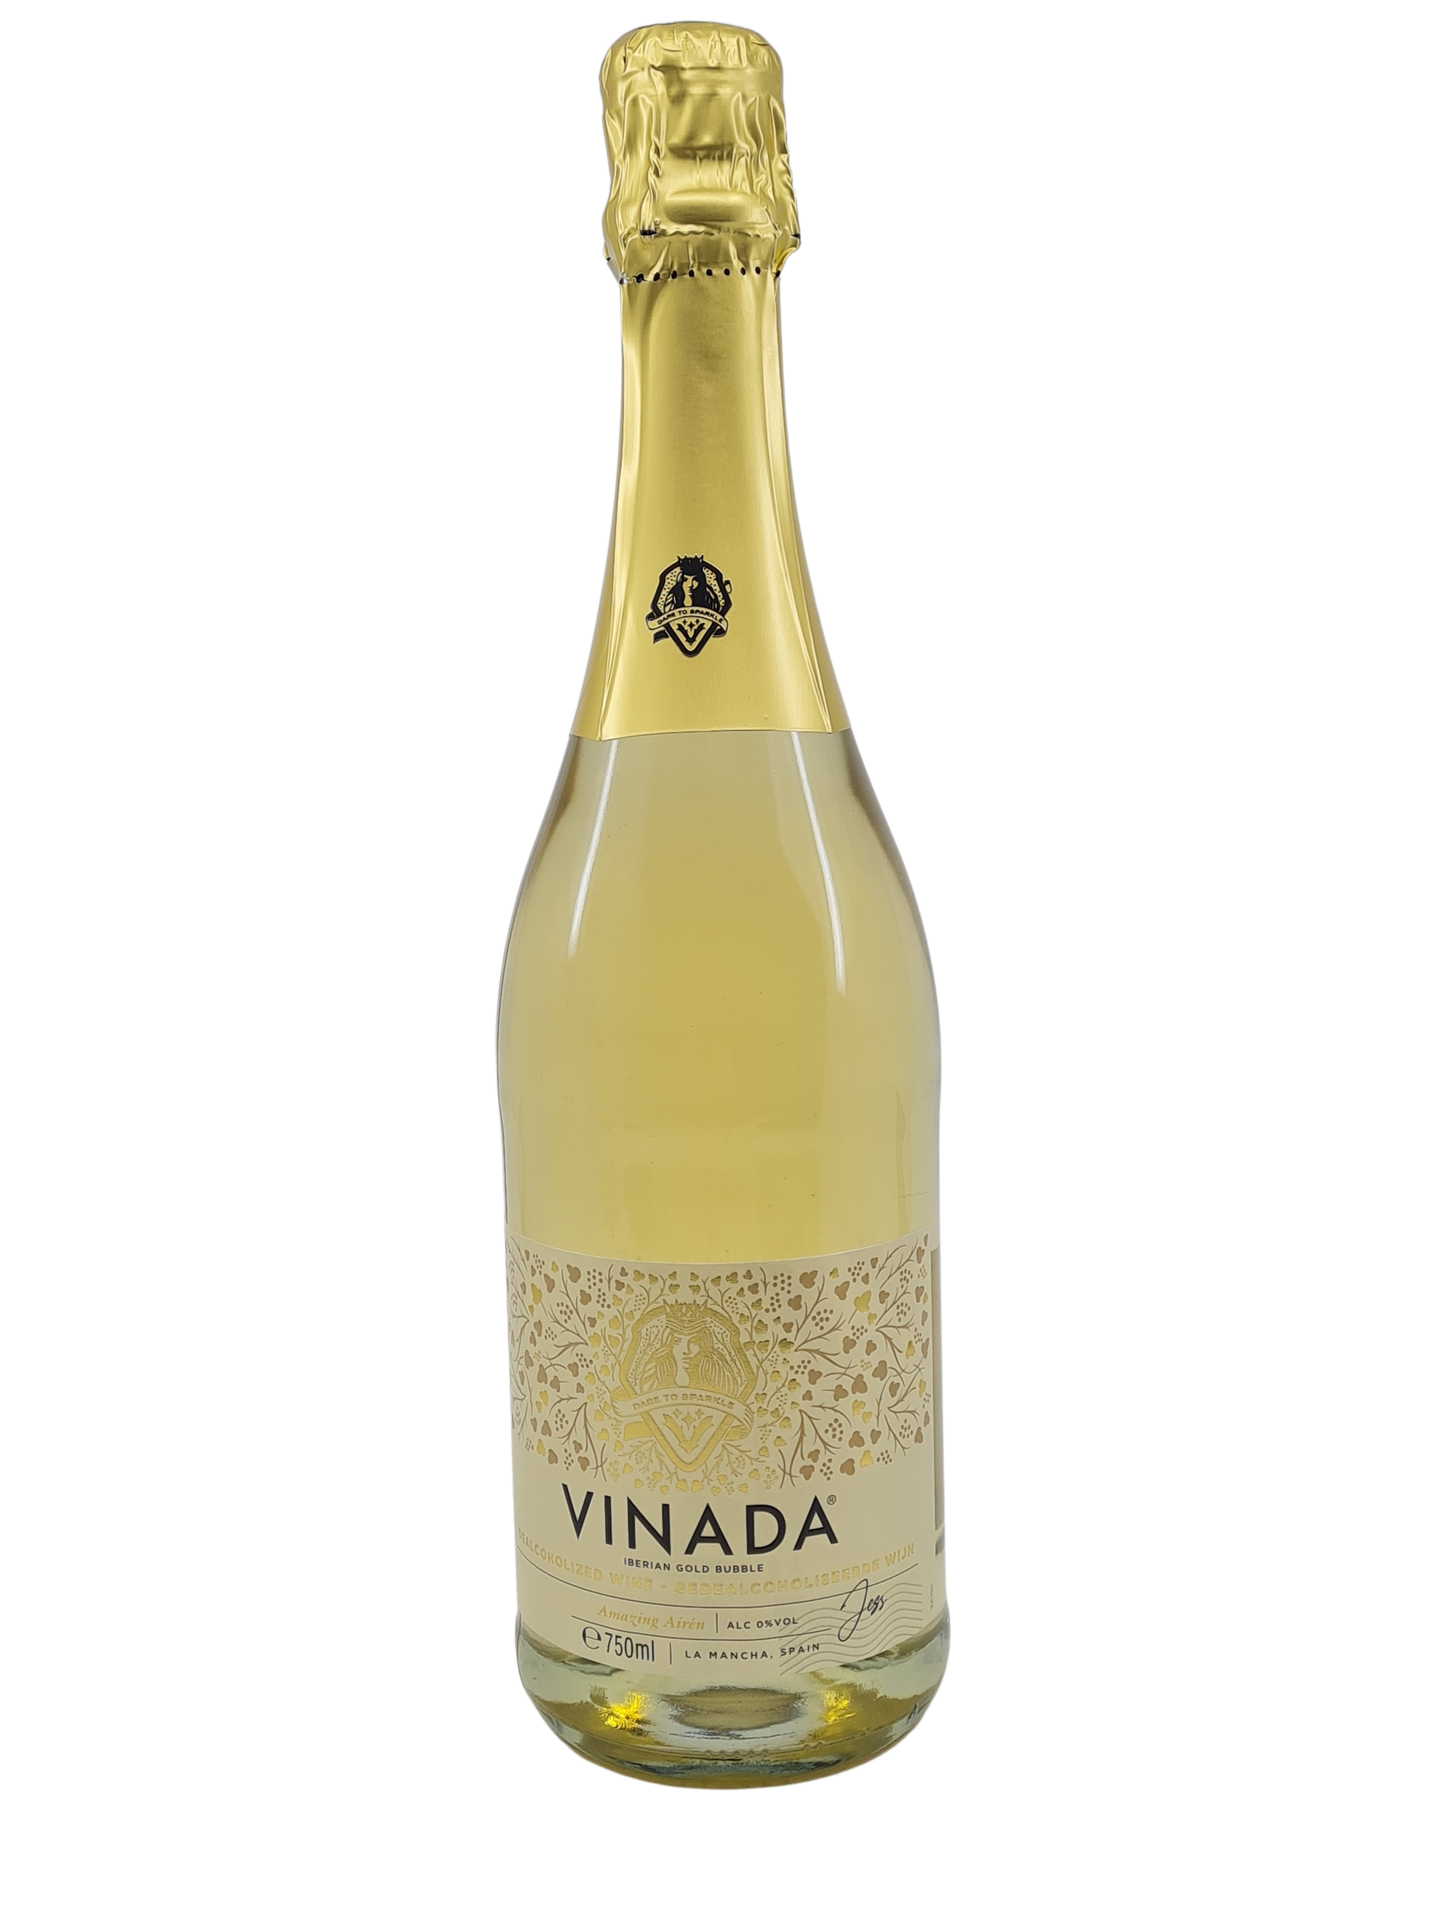 Vinada - Iberian Gold Bubble